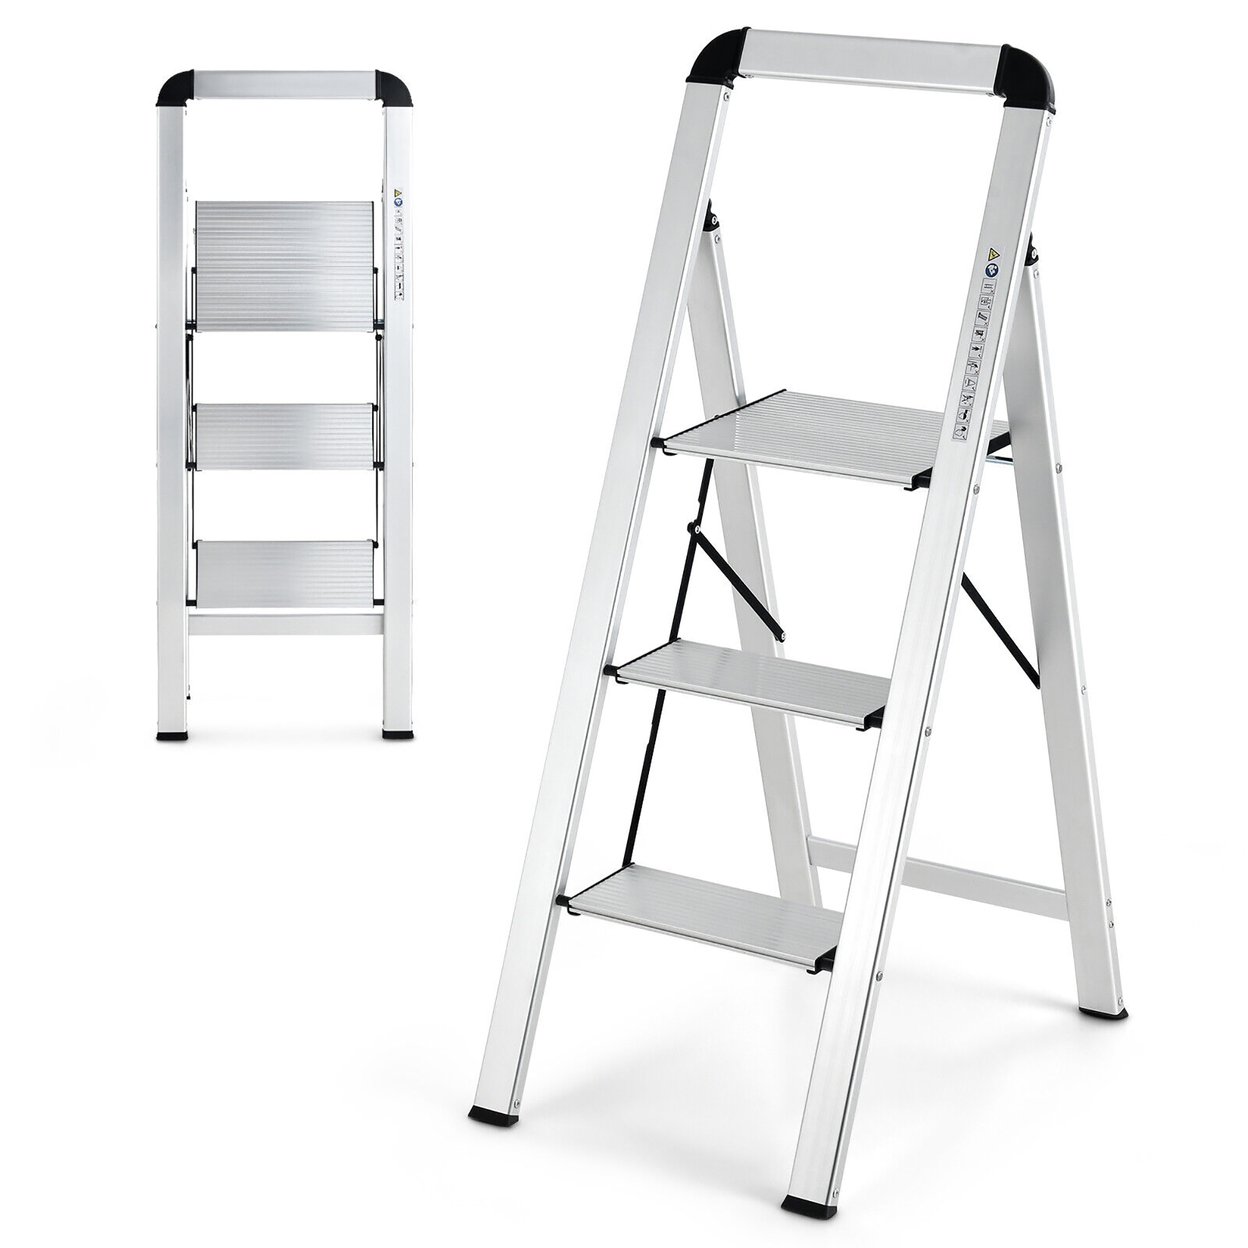 Gymax 3 Step Ladder Aluminum Folding Step Stool 330lbs Lightweight w/ Non-Slip Pedal